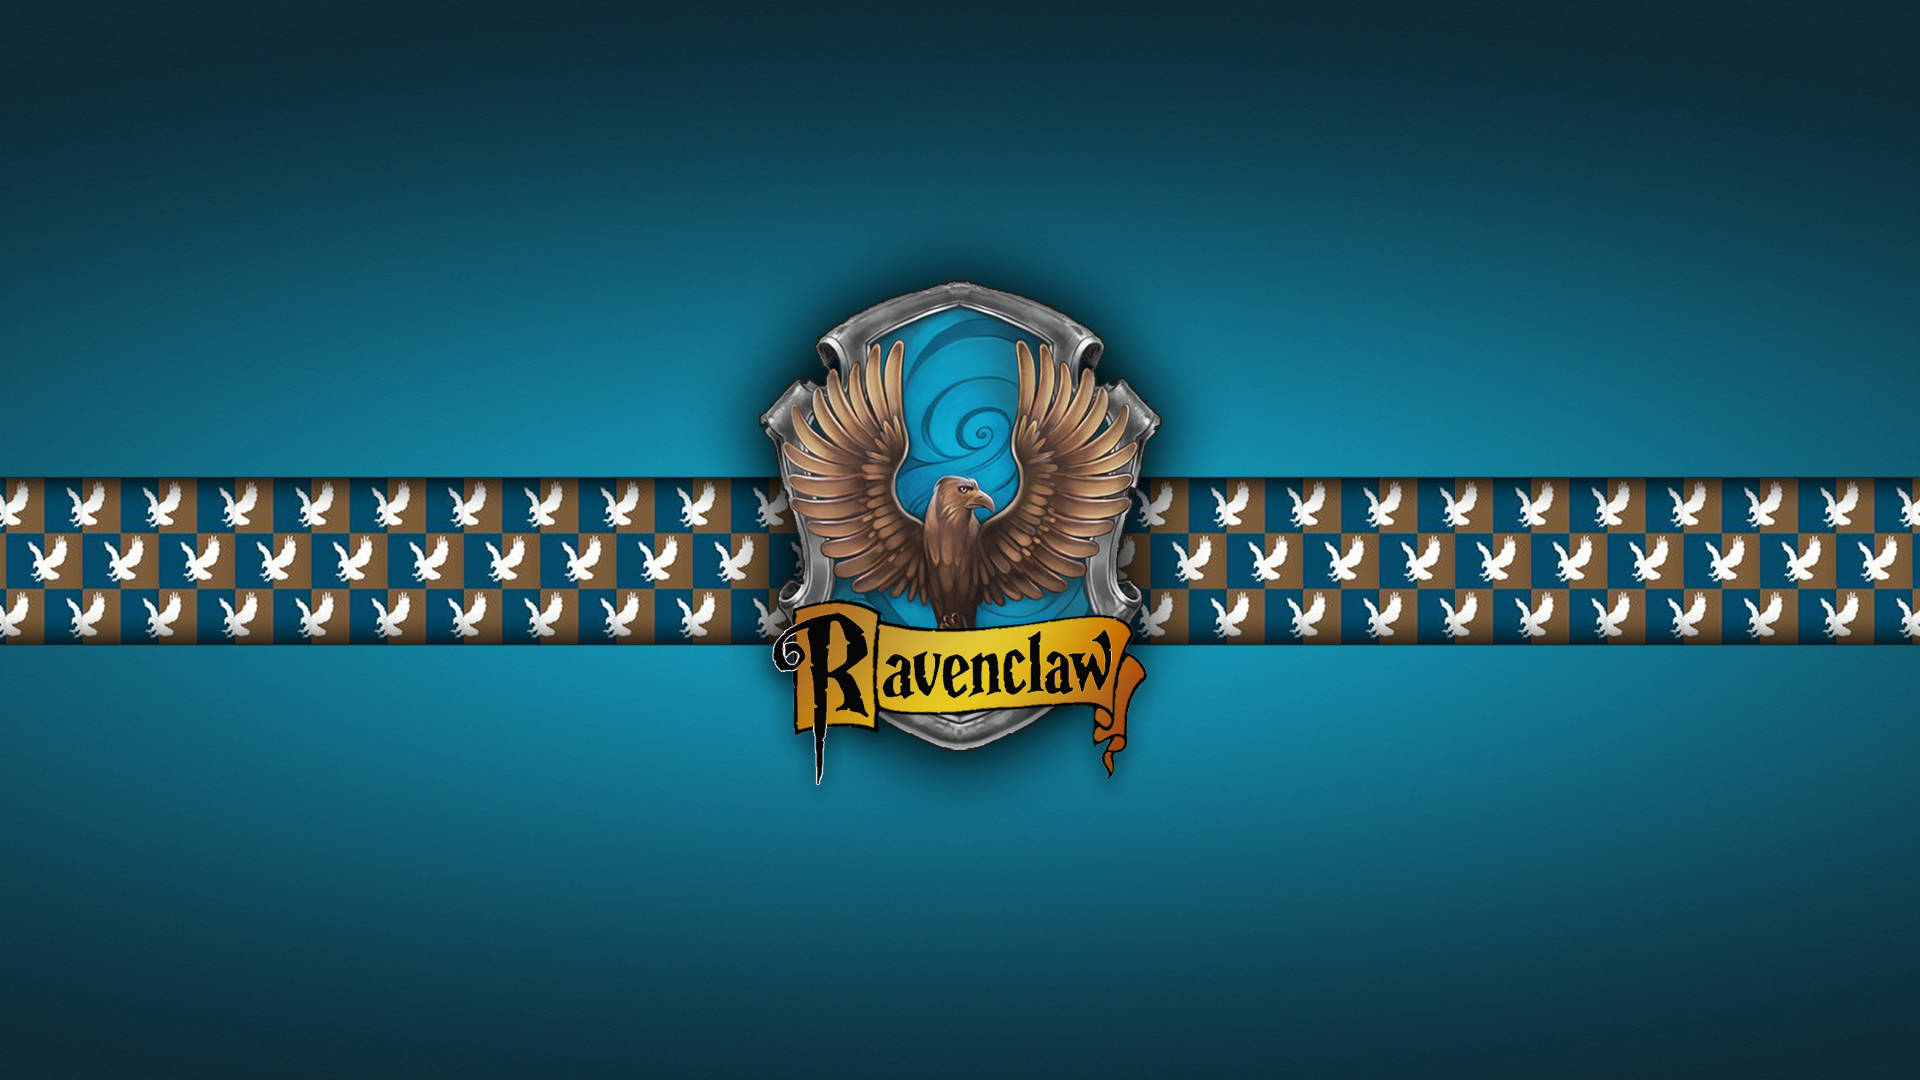 Harry Potter Houses Ravenclaw Blue Background